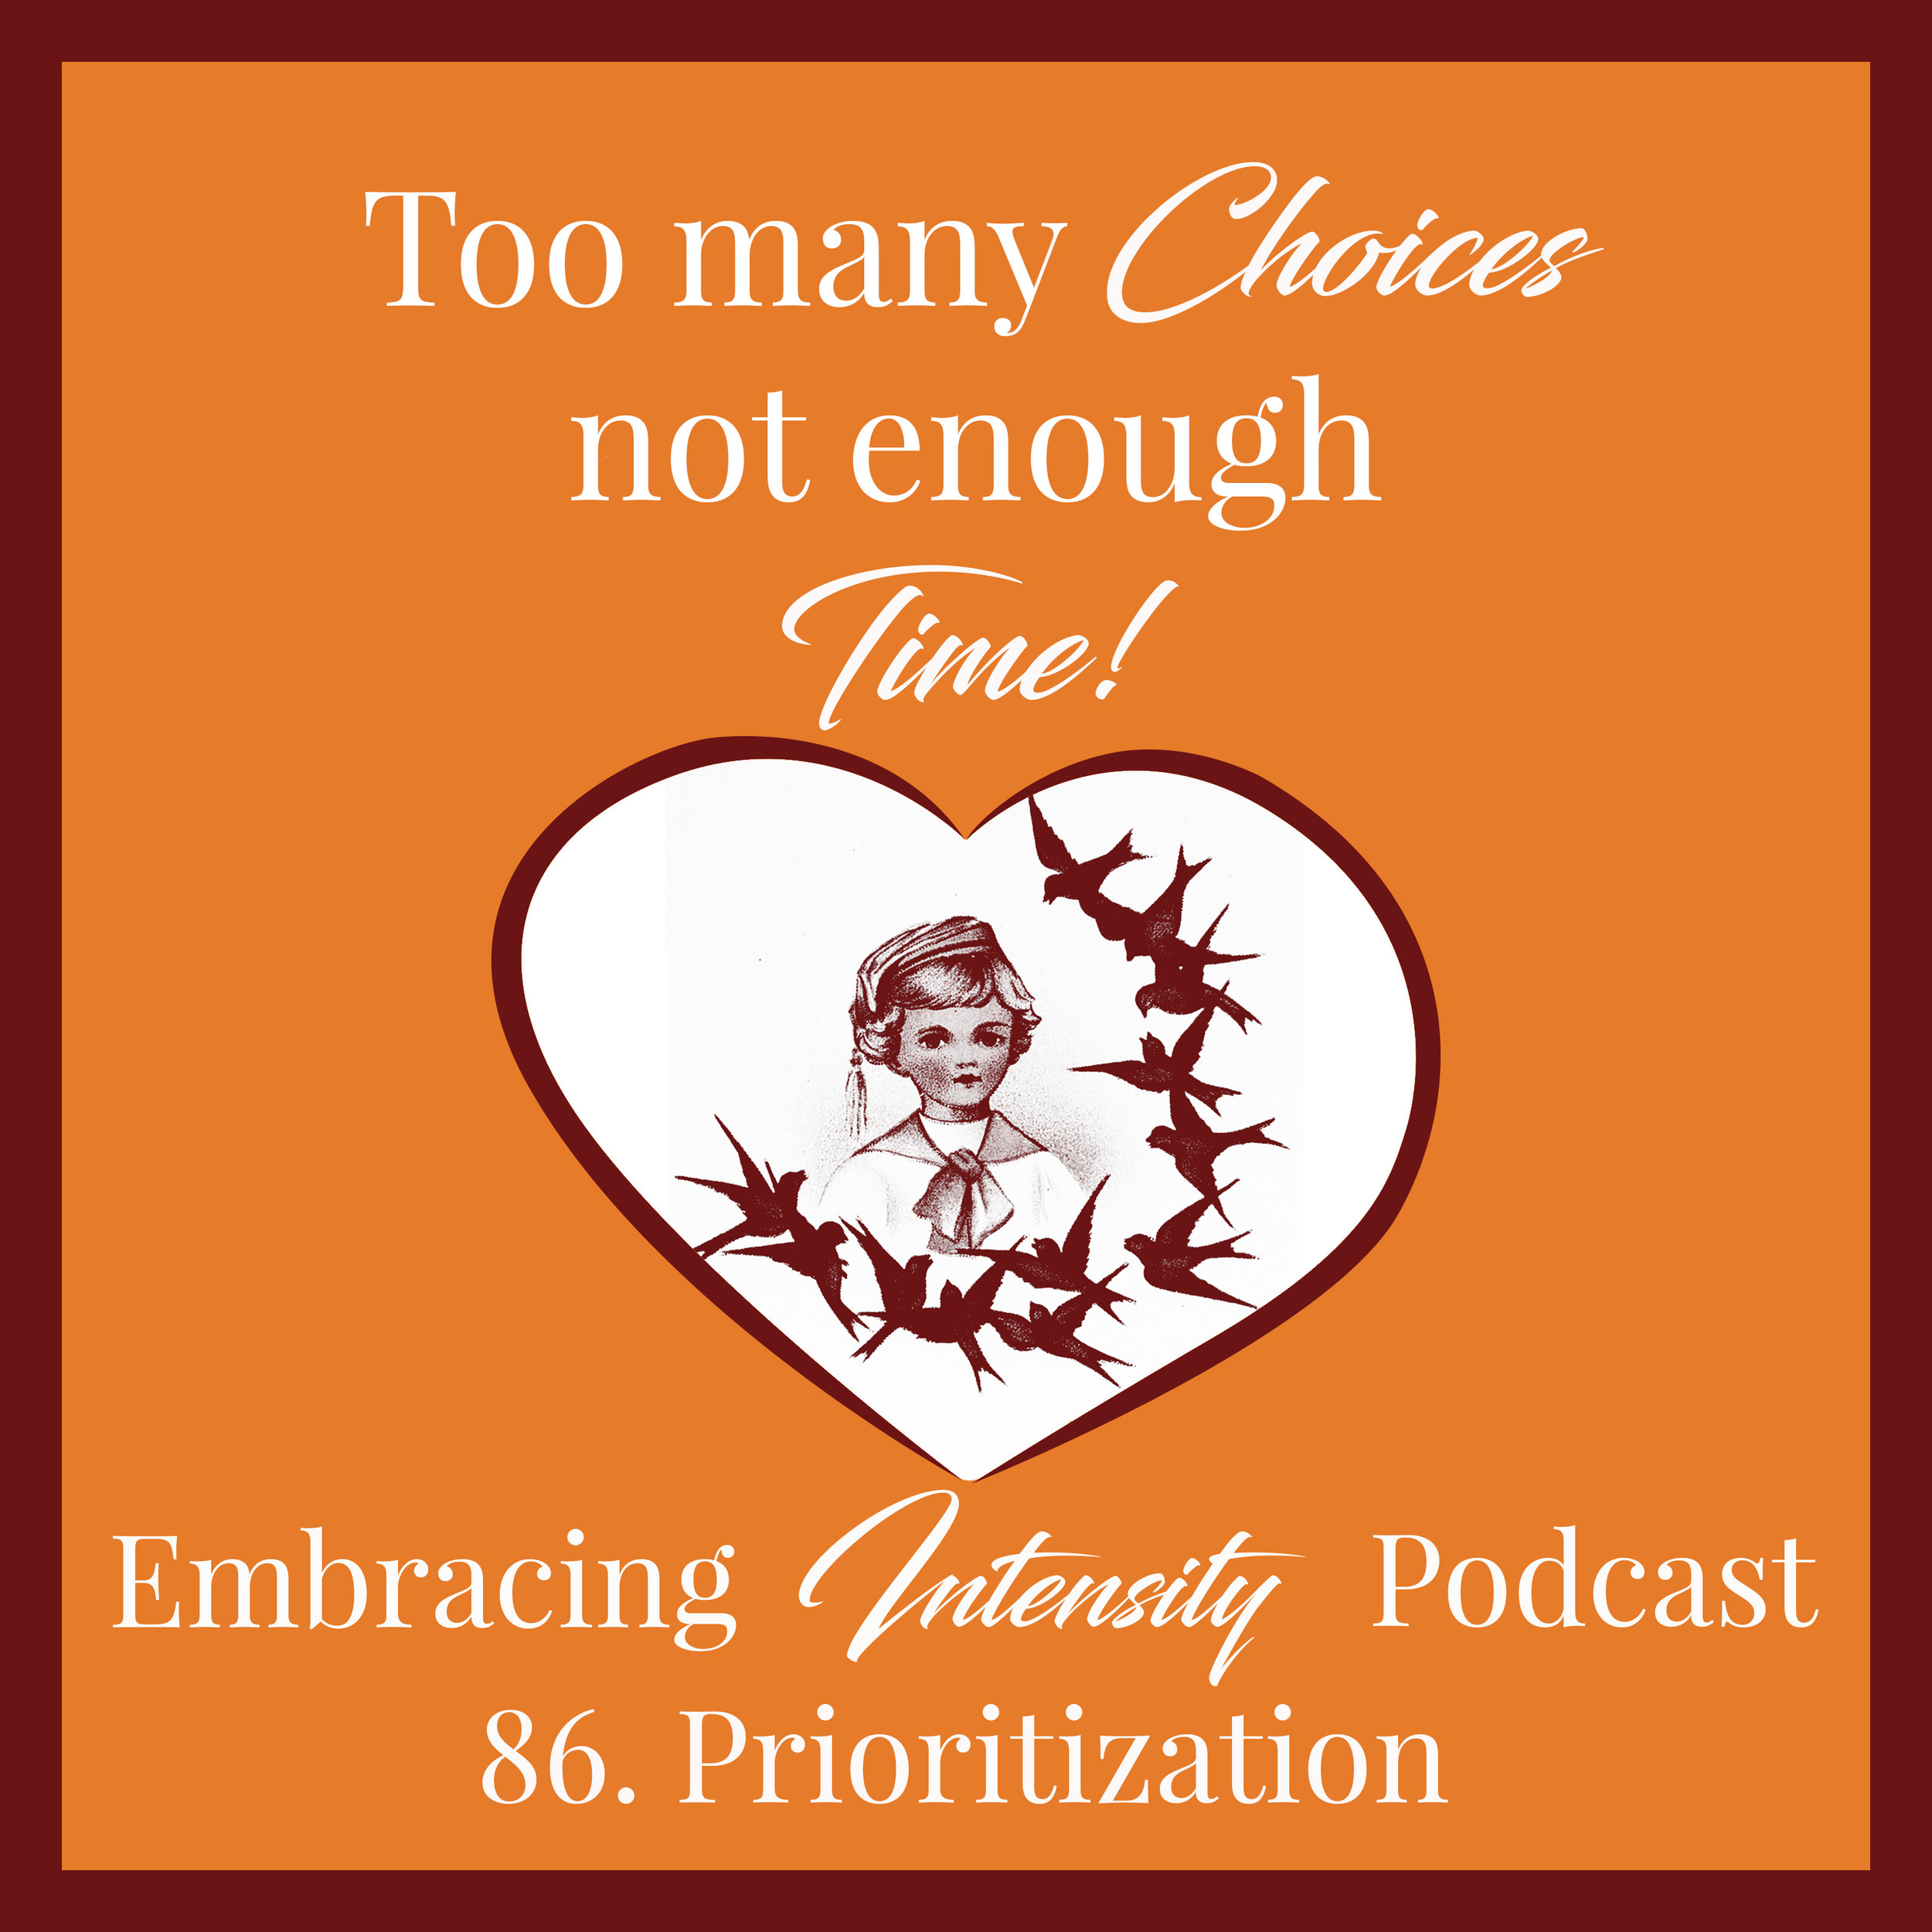 Prioritization - Embracing Intensity Ep. 86